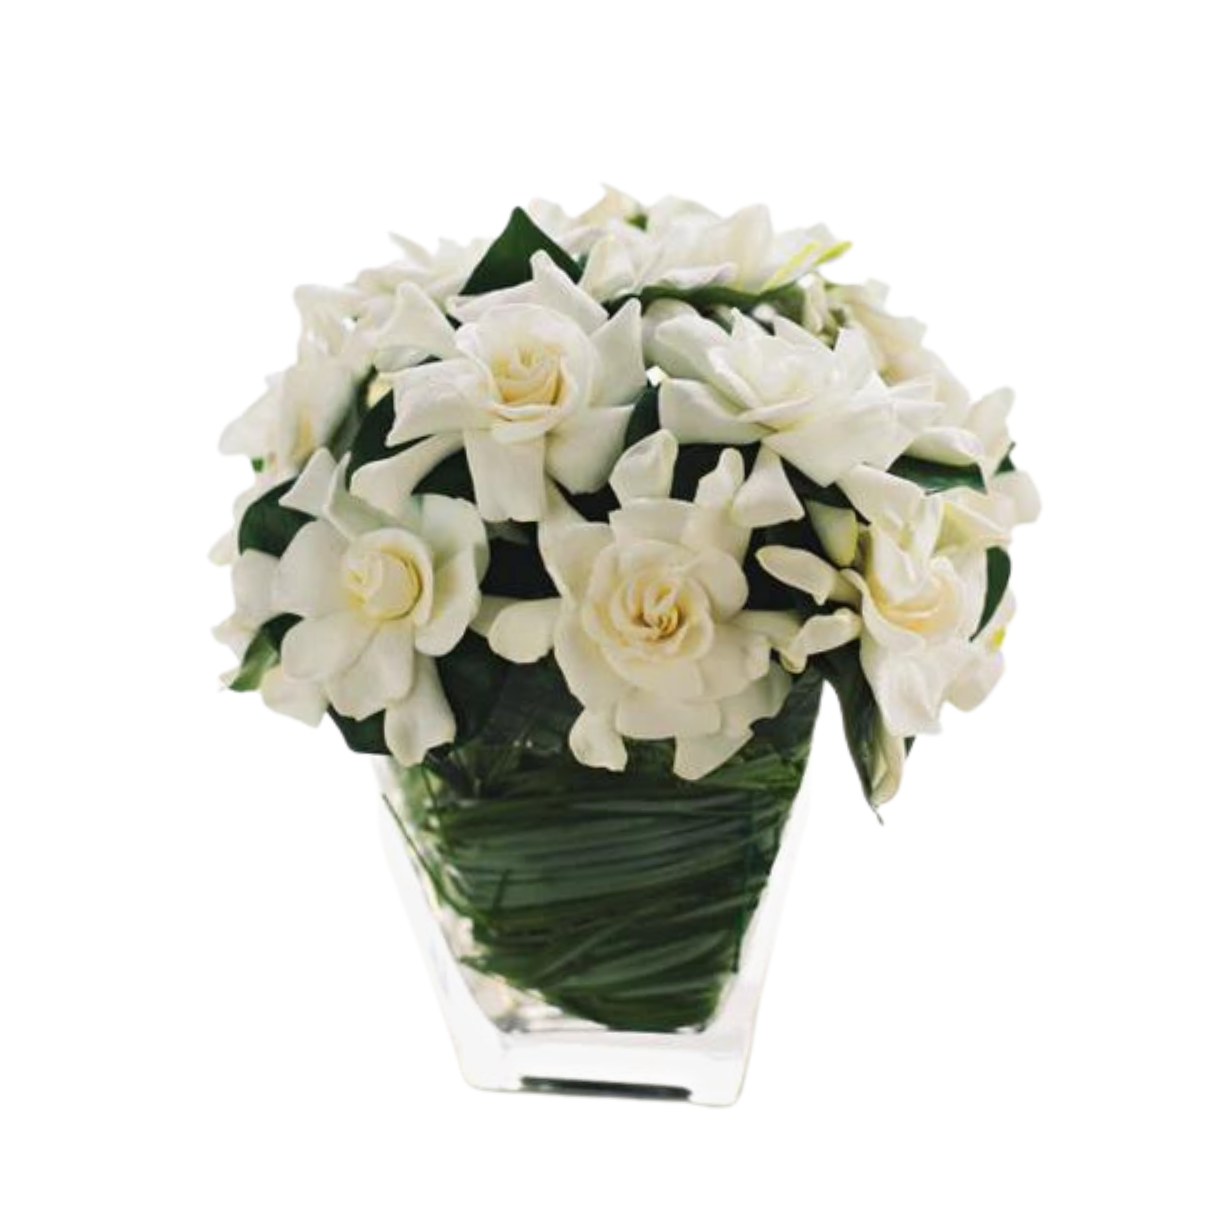 Bianca – Flores Mantilla: Floral Design & Gifts